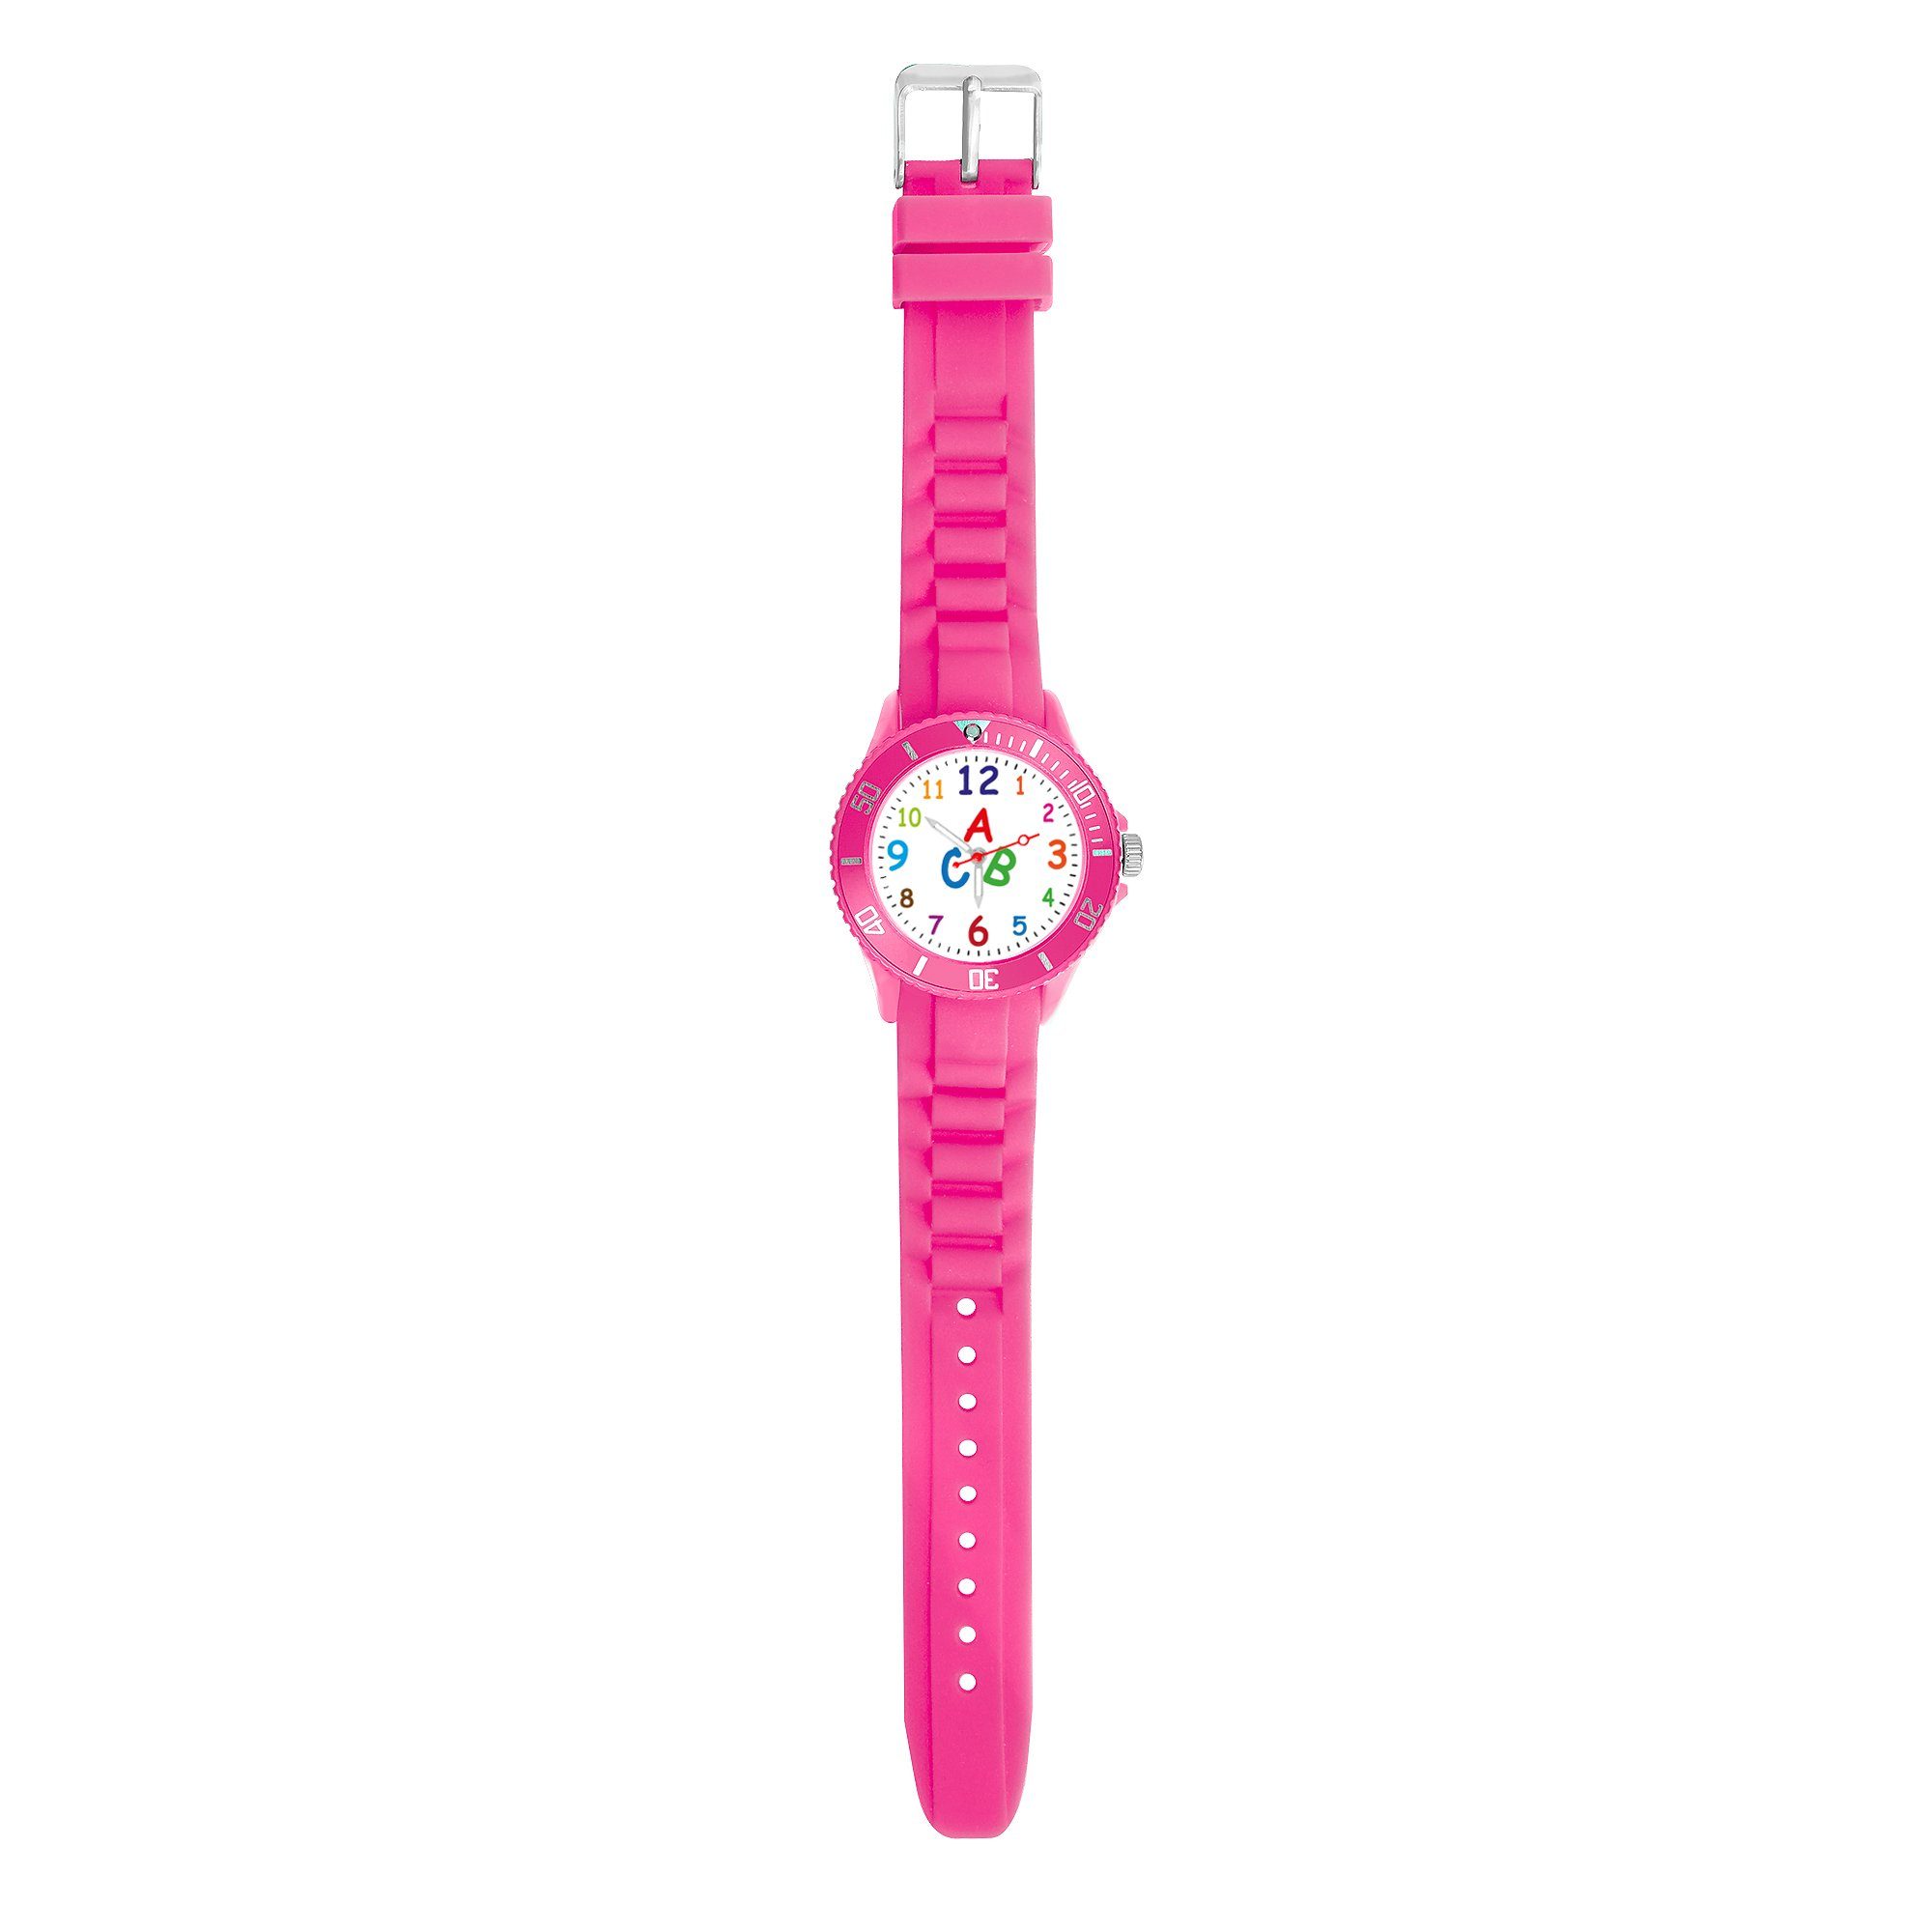 Armbanduhr 34mm Silikon Farbige Kinder Bunte Quarz Kinderuhr Analog Pink Quarzuhr Sportuhr Lernuhr ABC Taffstyle Silikonuhr Zahlen Bunt, Uhr